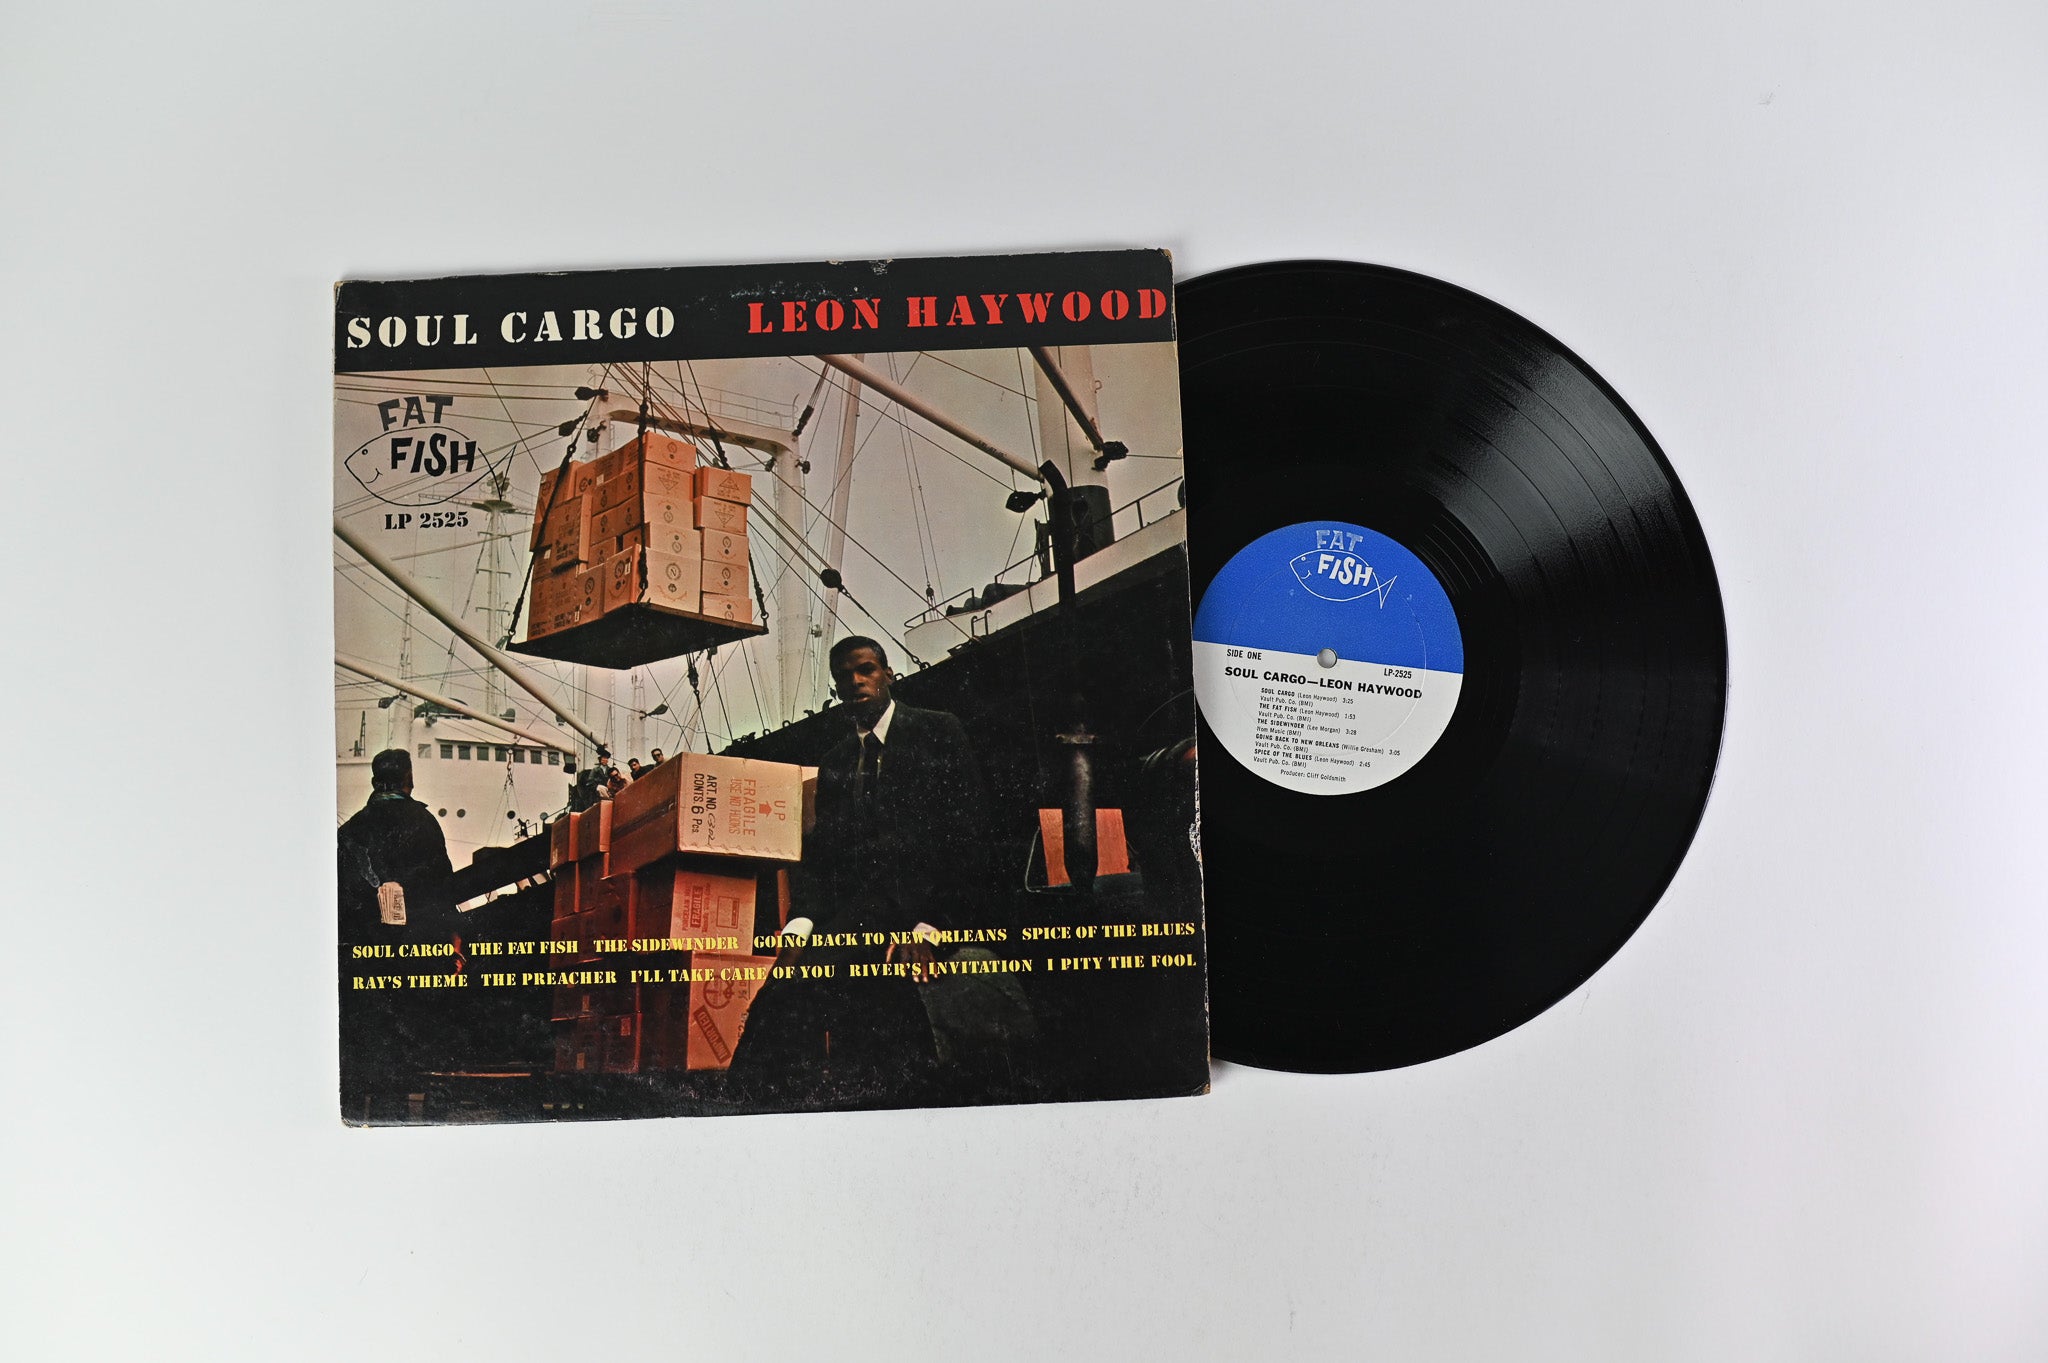 Leon Haywood - Soul Cargo on Fat Fish